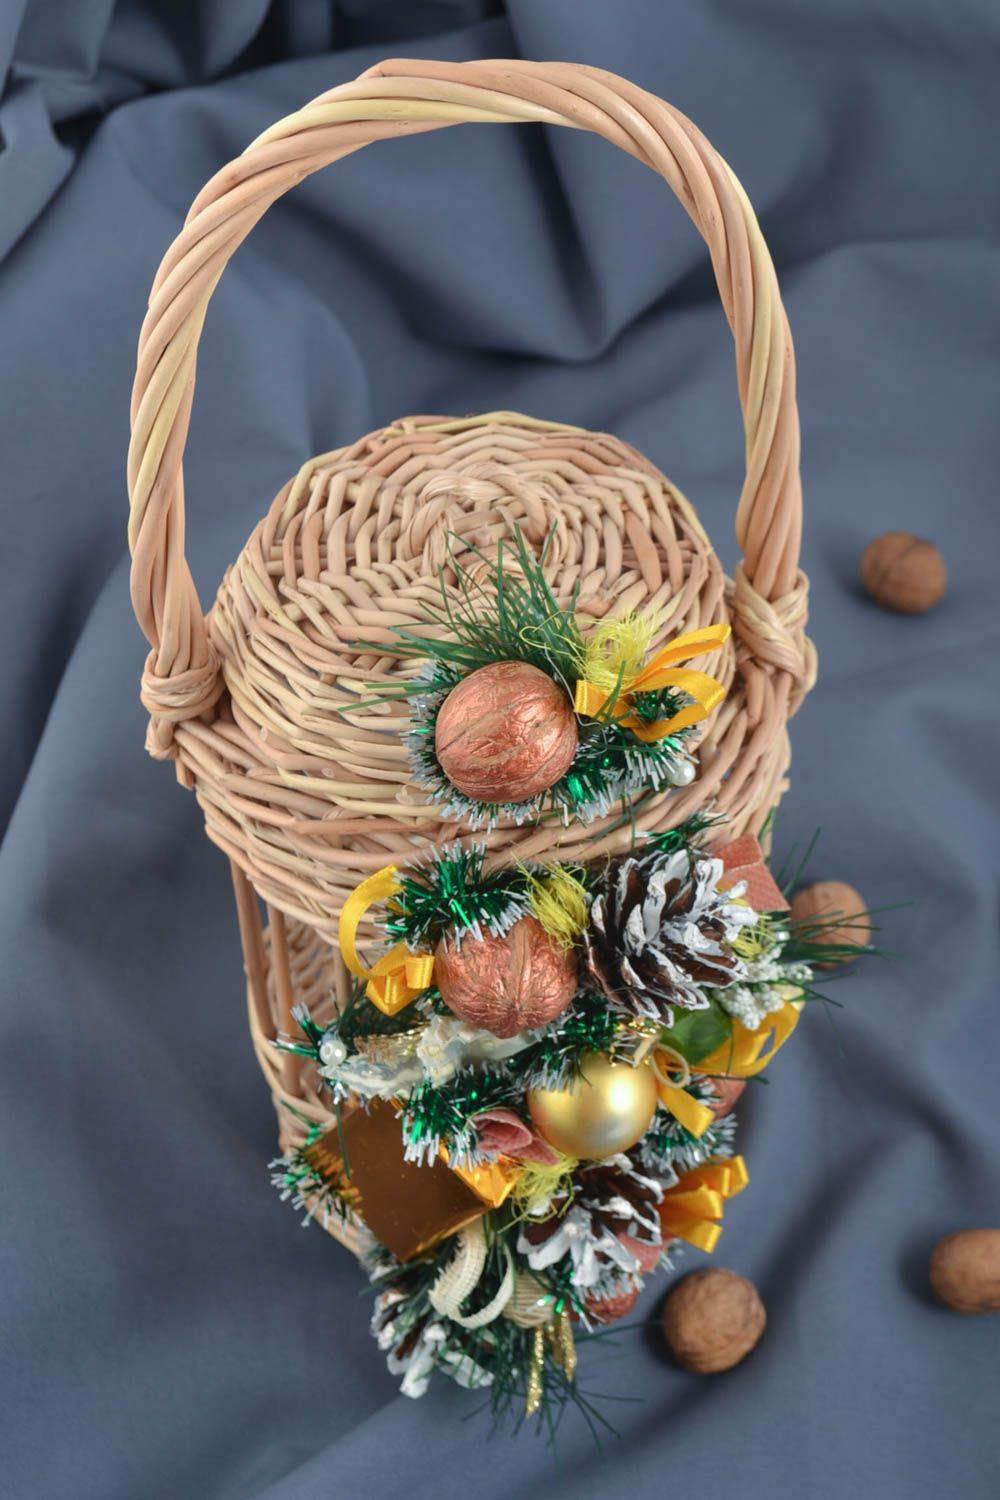 Unusual handmade woven basket designer Easter basket ideas gift ideas photo 1